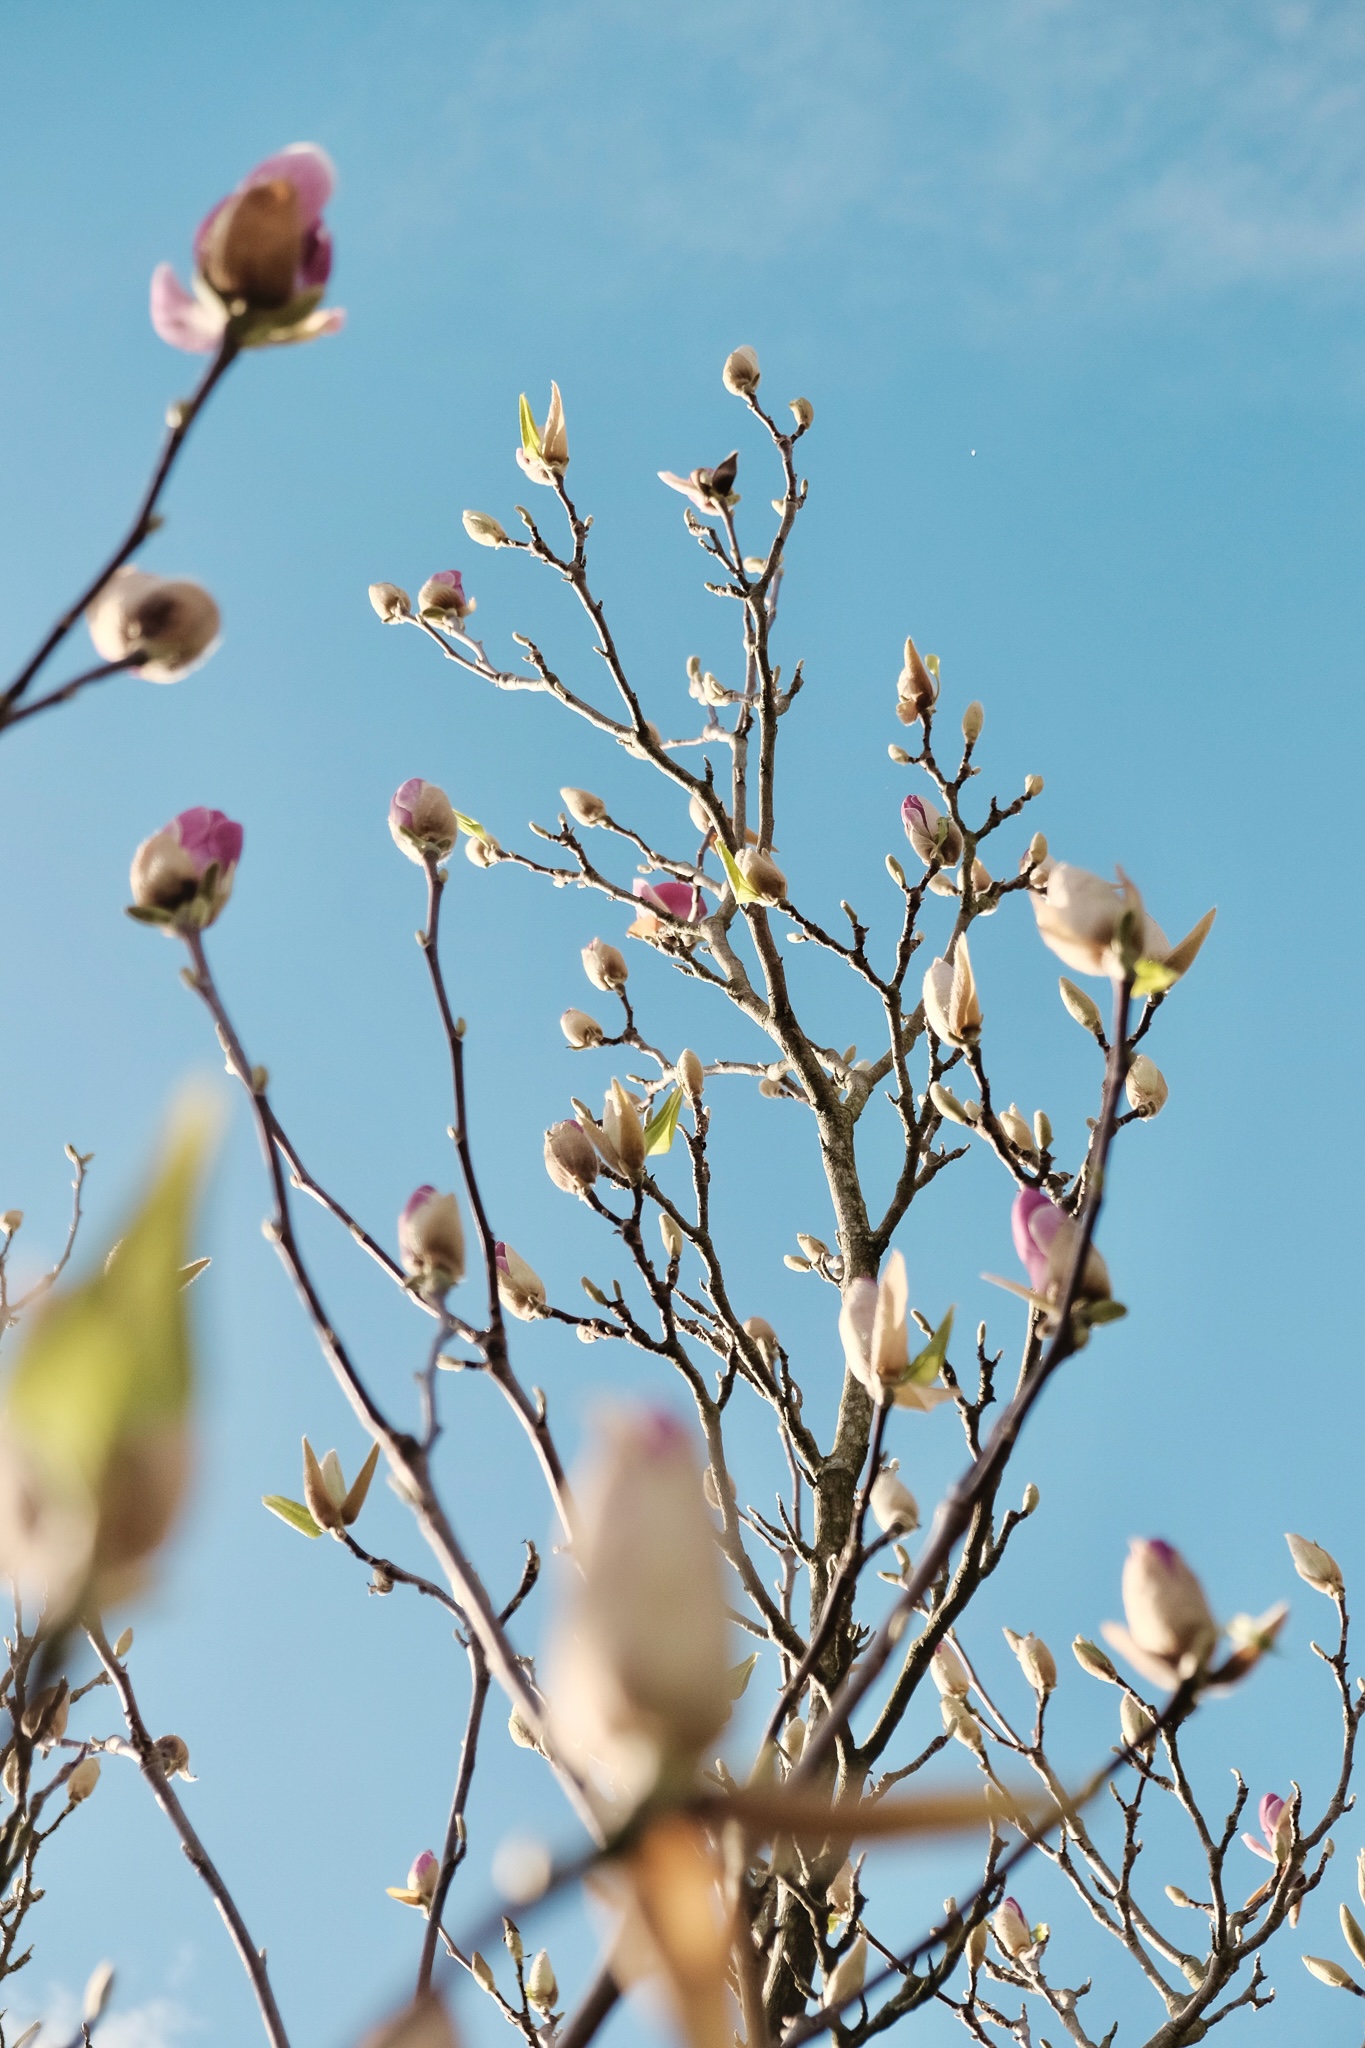 Purple magnolia buds against a blue sky